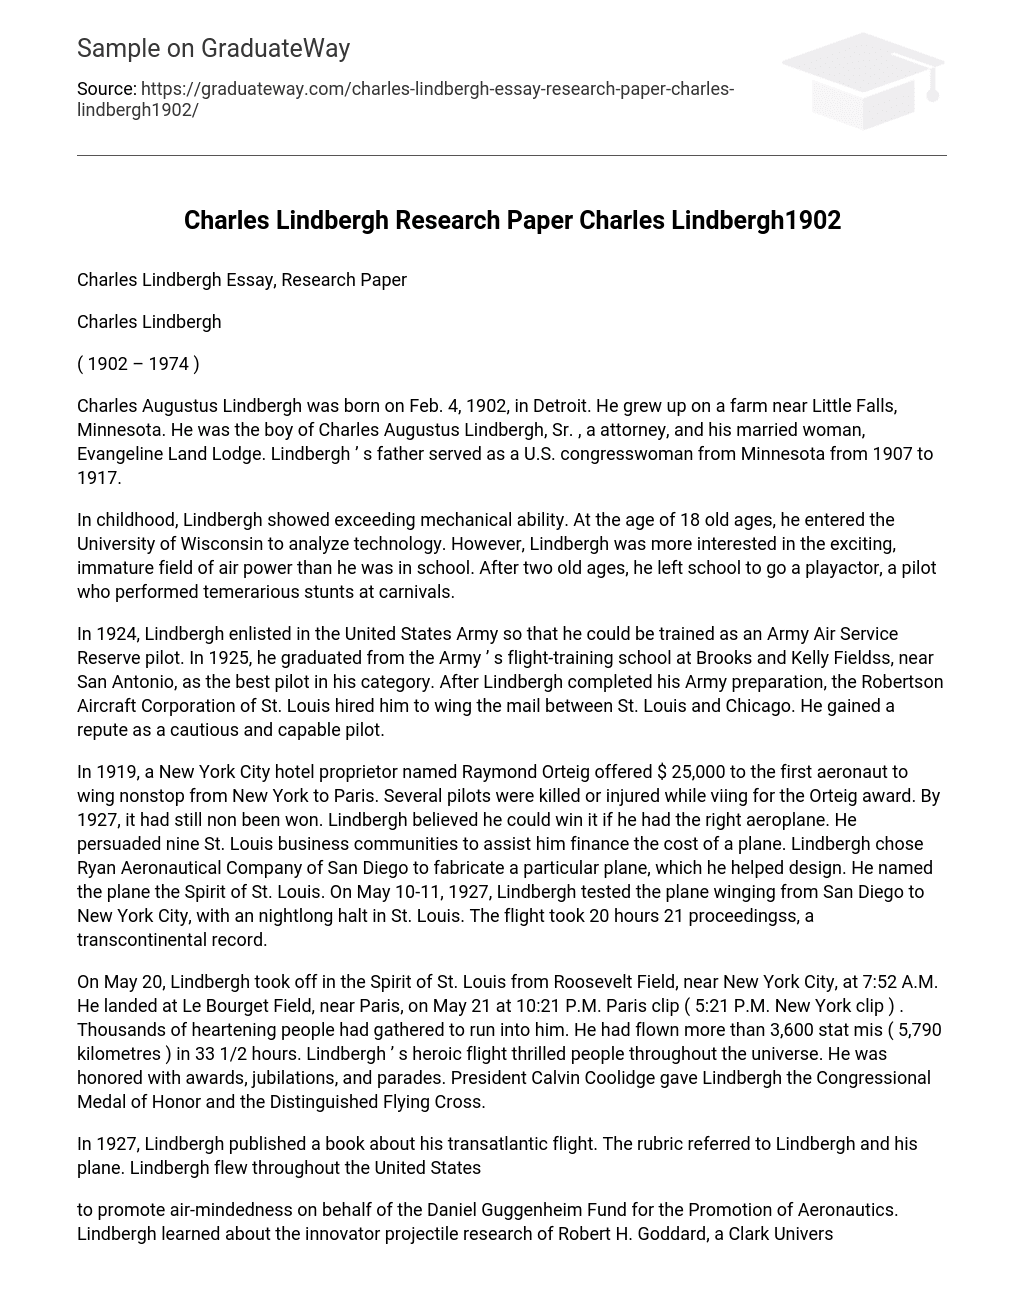 Charles Lindbergh Research Paper Charles Lindbergh1902